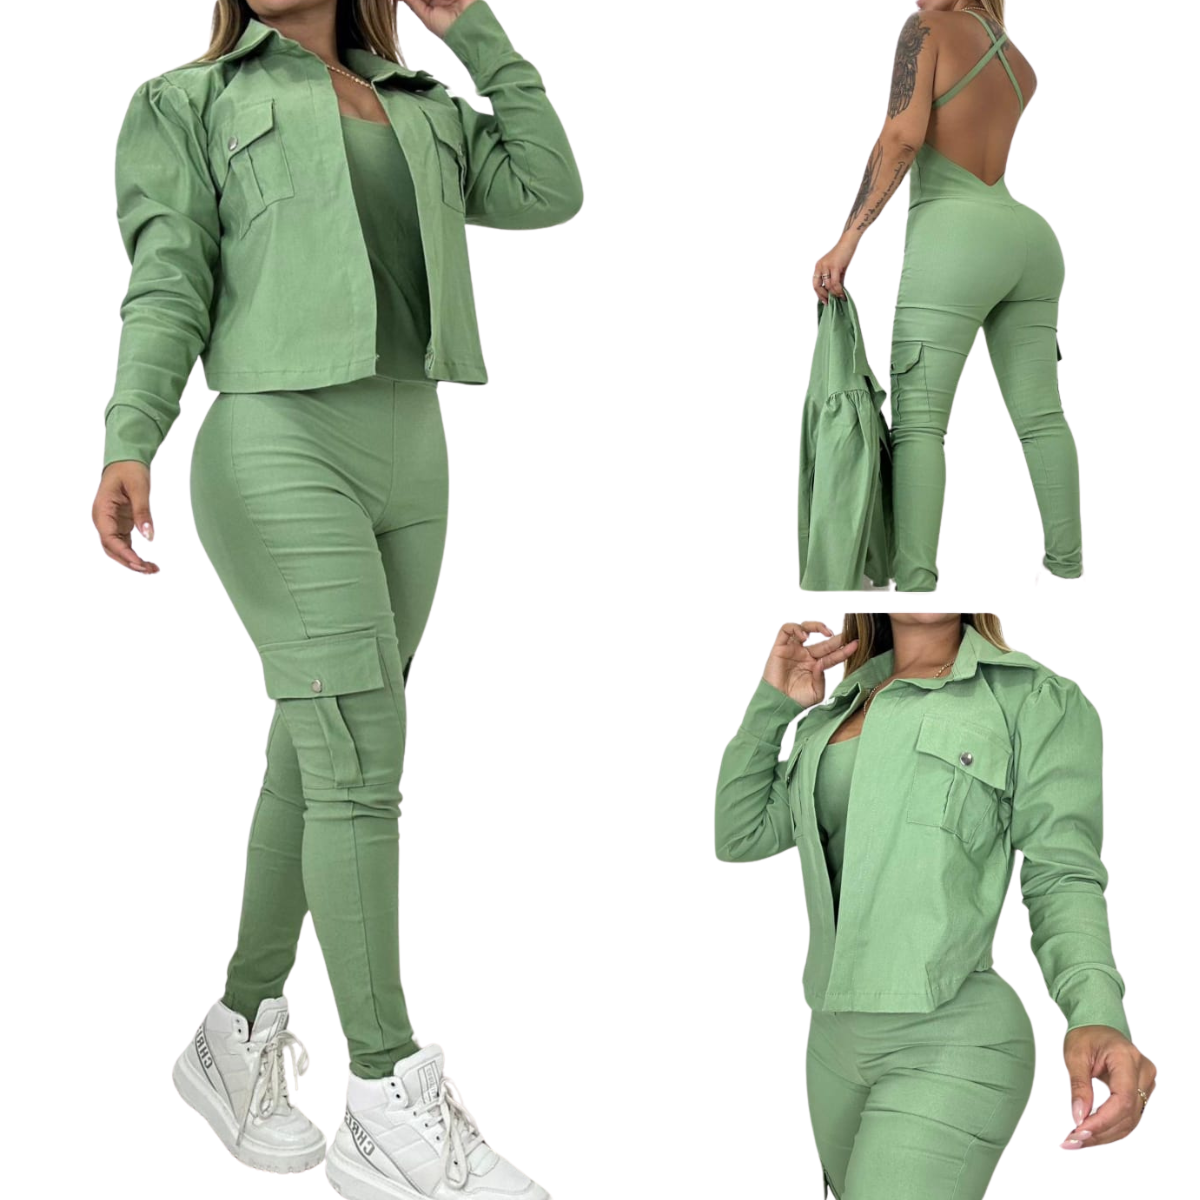 enterizo cargo y chaqueta mujer (talla única) comprar en onlineshoppingcenterg Colombia centro de compras en linea osc